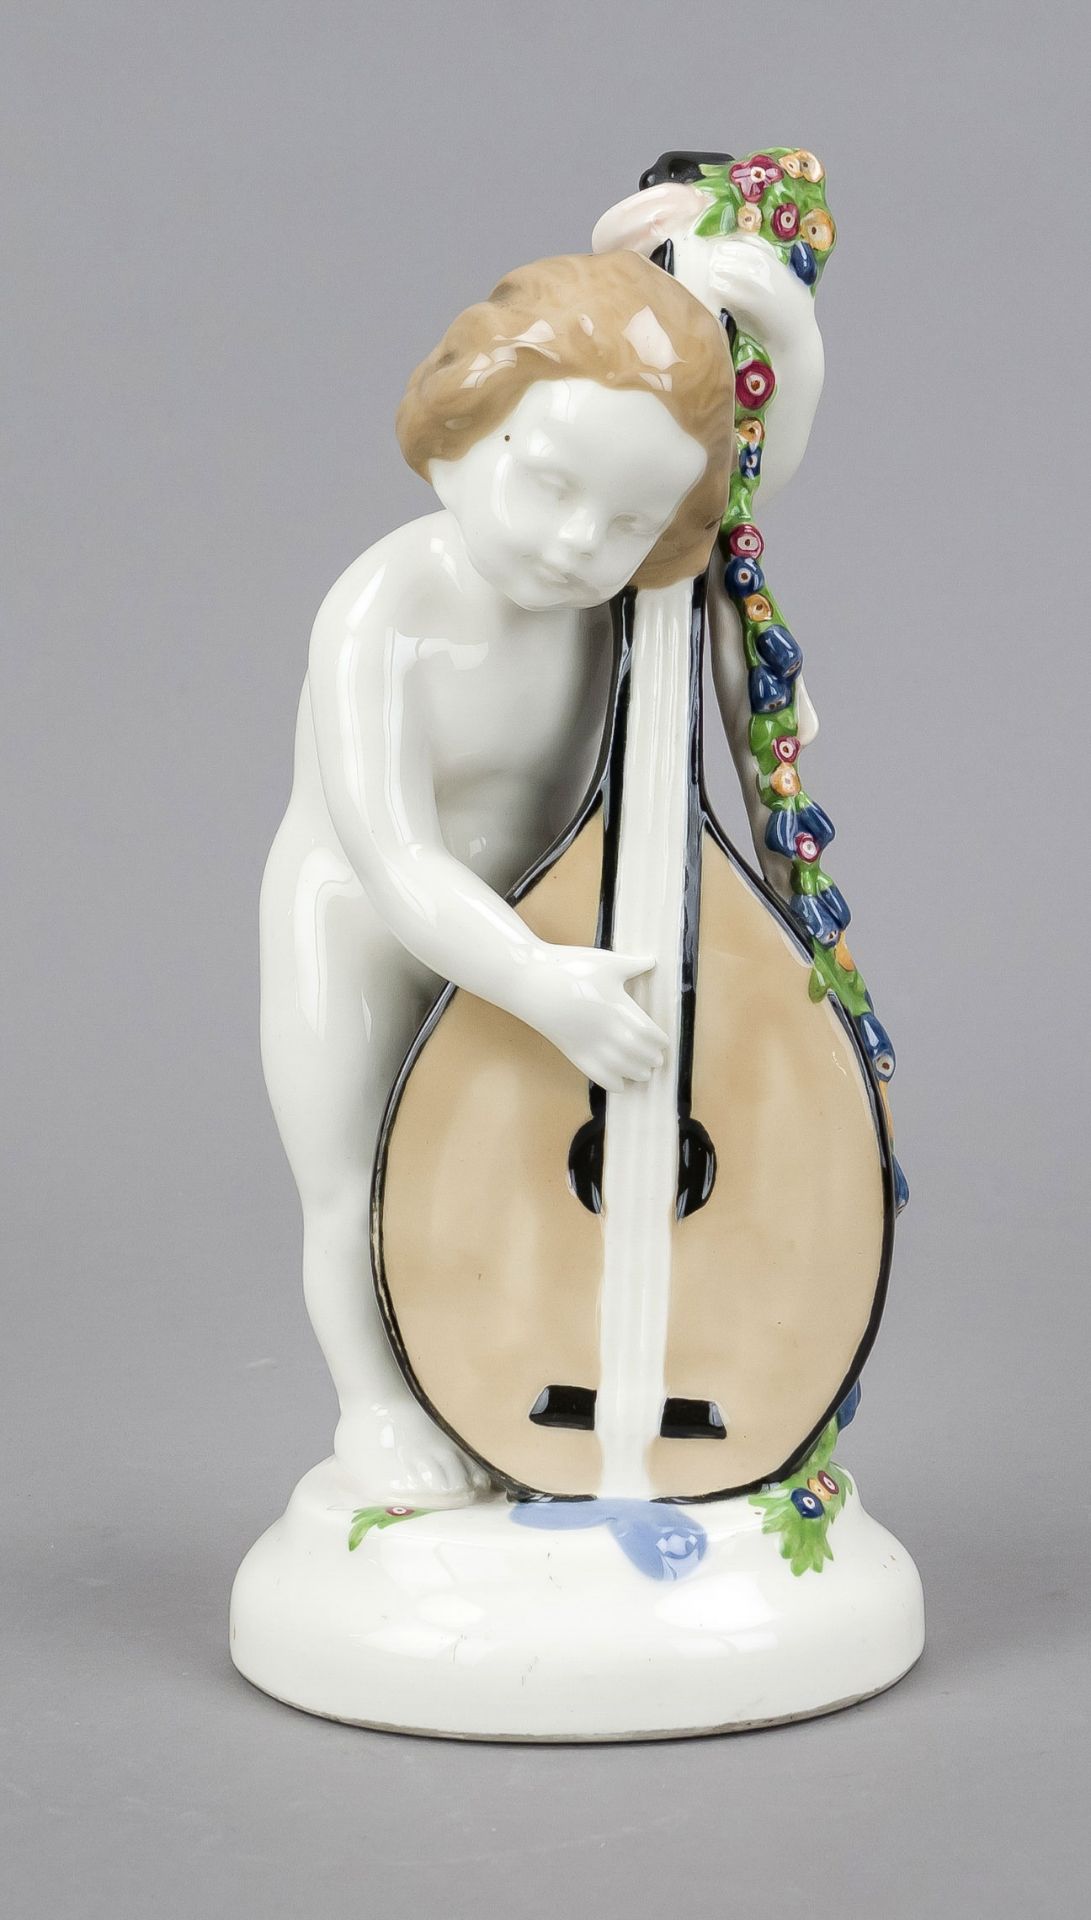 Art Nouveau figure, putto with double bass, Kunstkeramische Fabrik A. Förster & Co., Vienna, c.